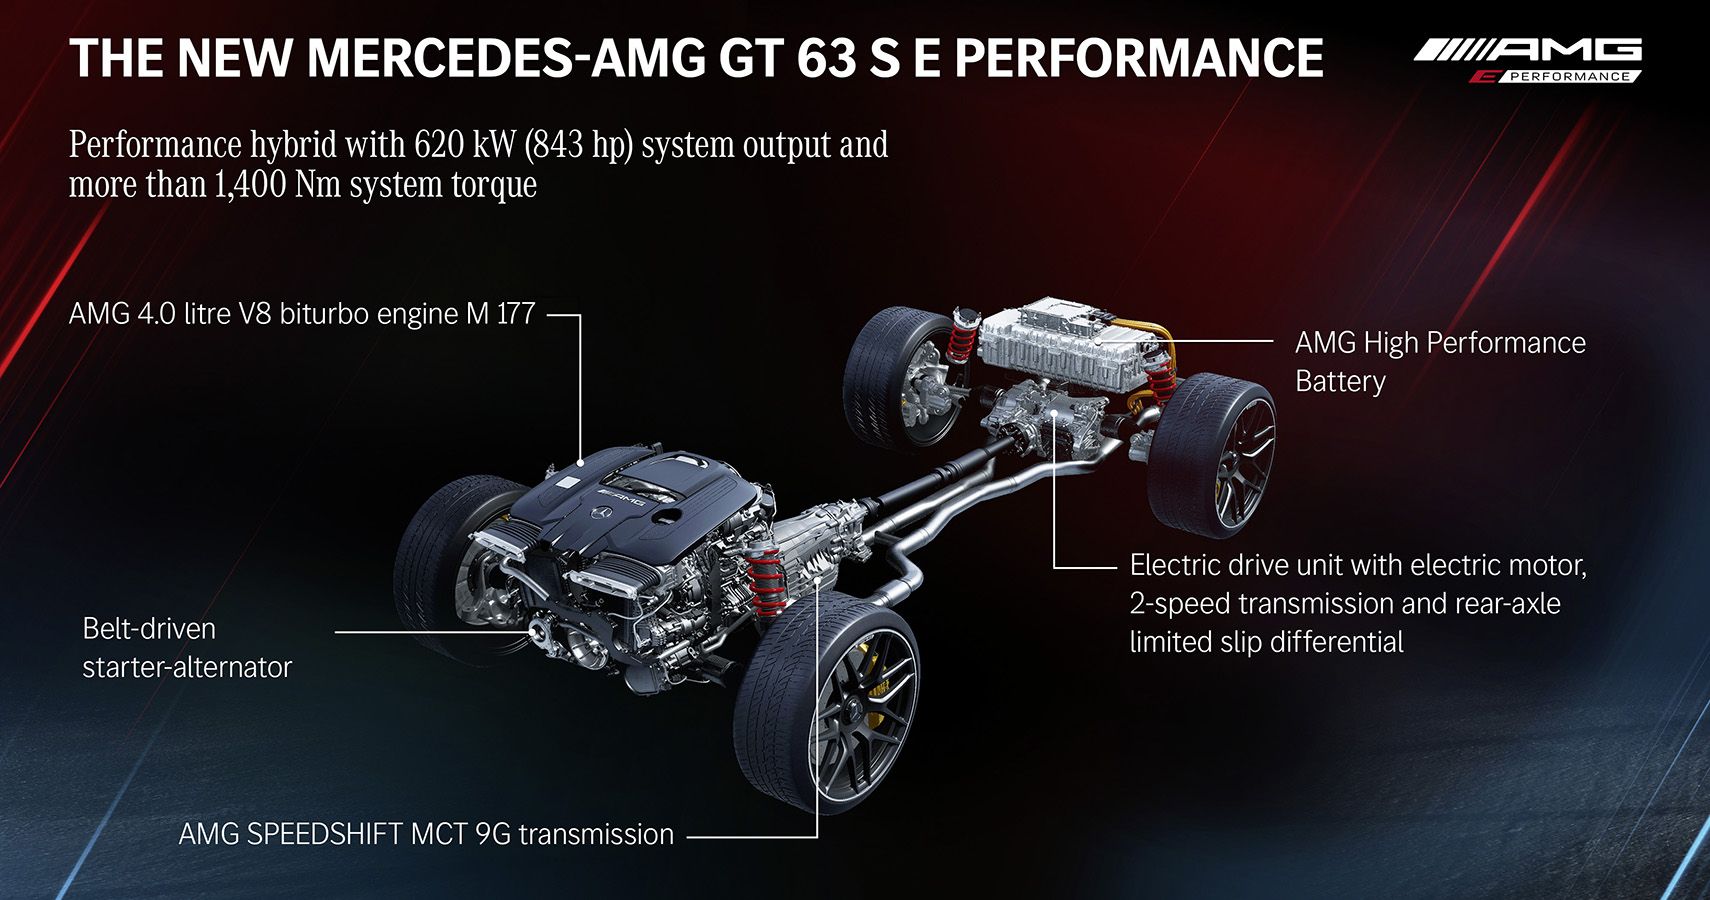 AMG GT 63 S E Performance hybrid drive